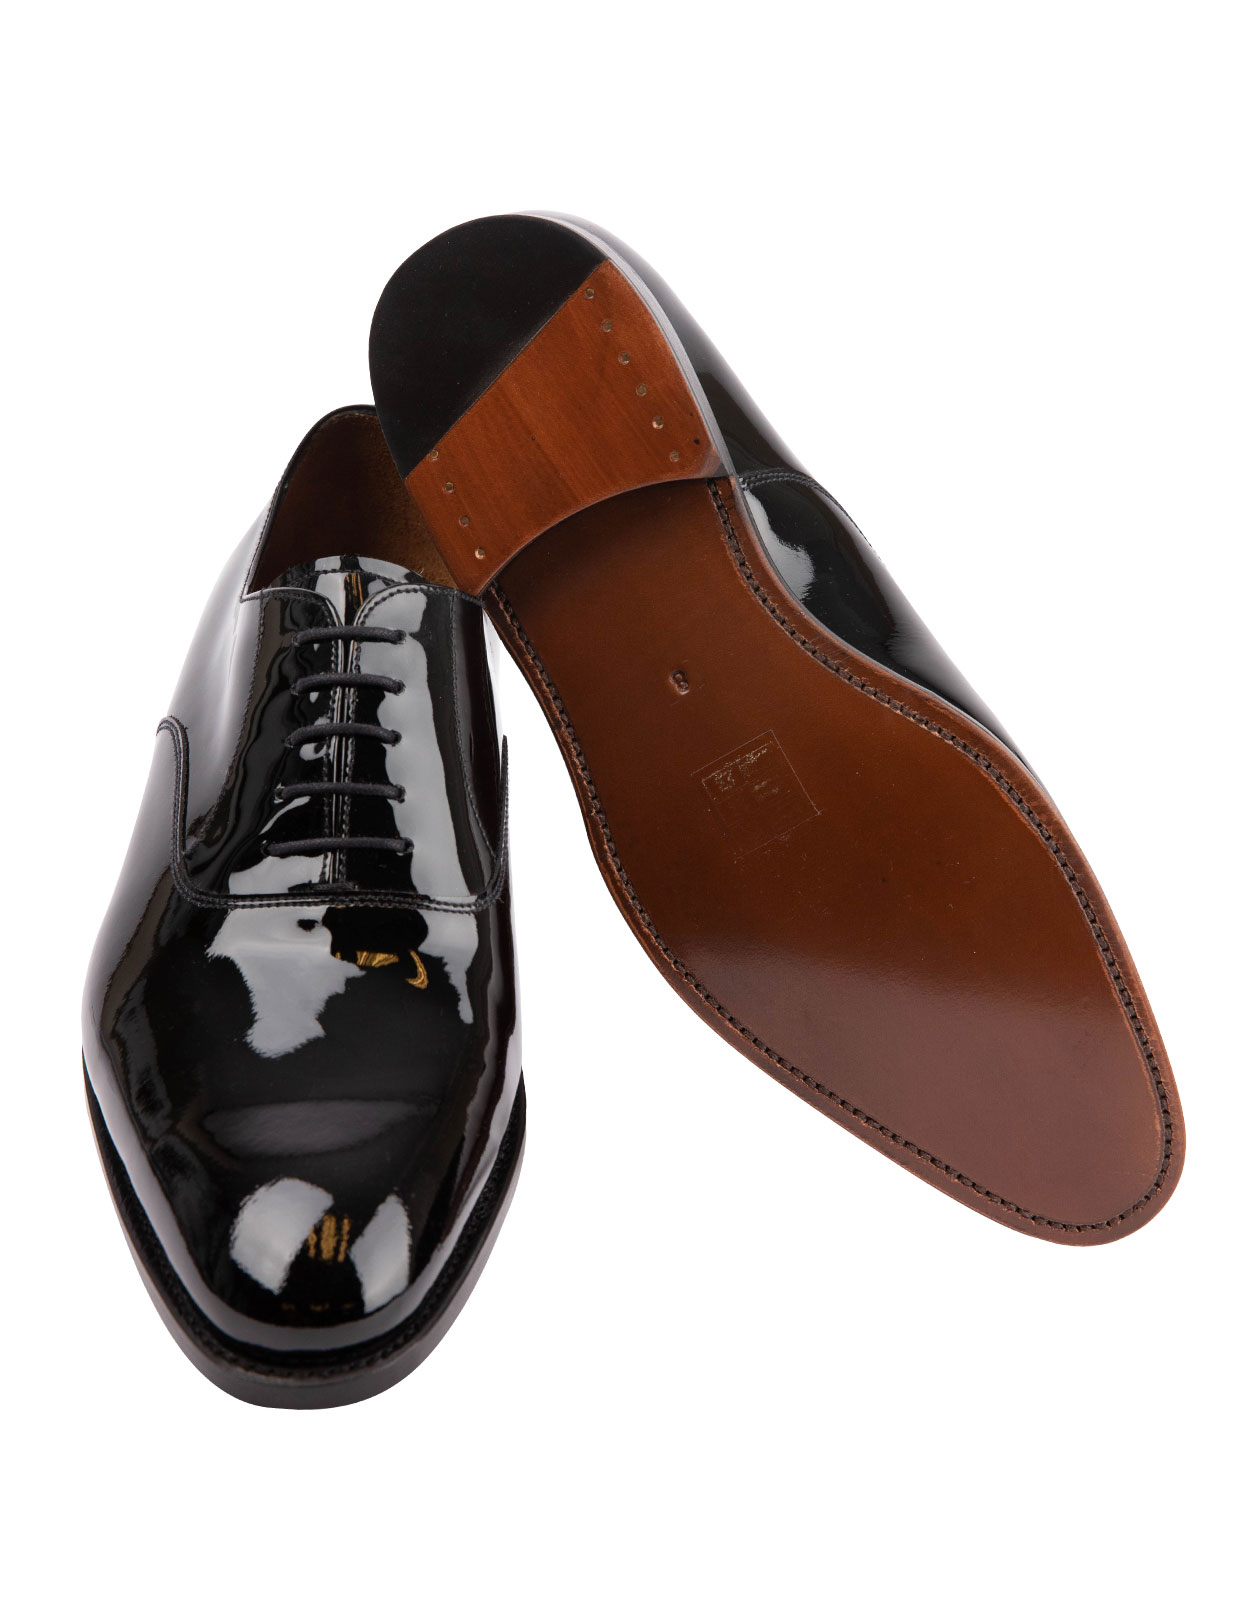 Patent Leather Oxford Shoe Black Stl 9.5